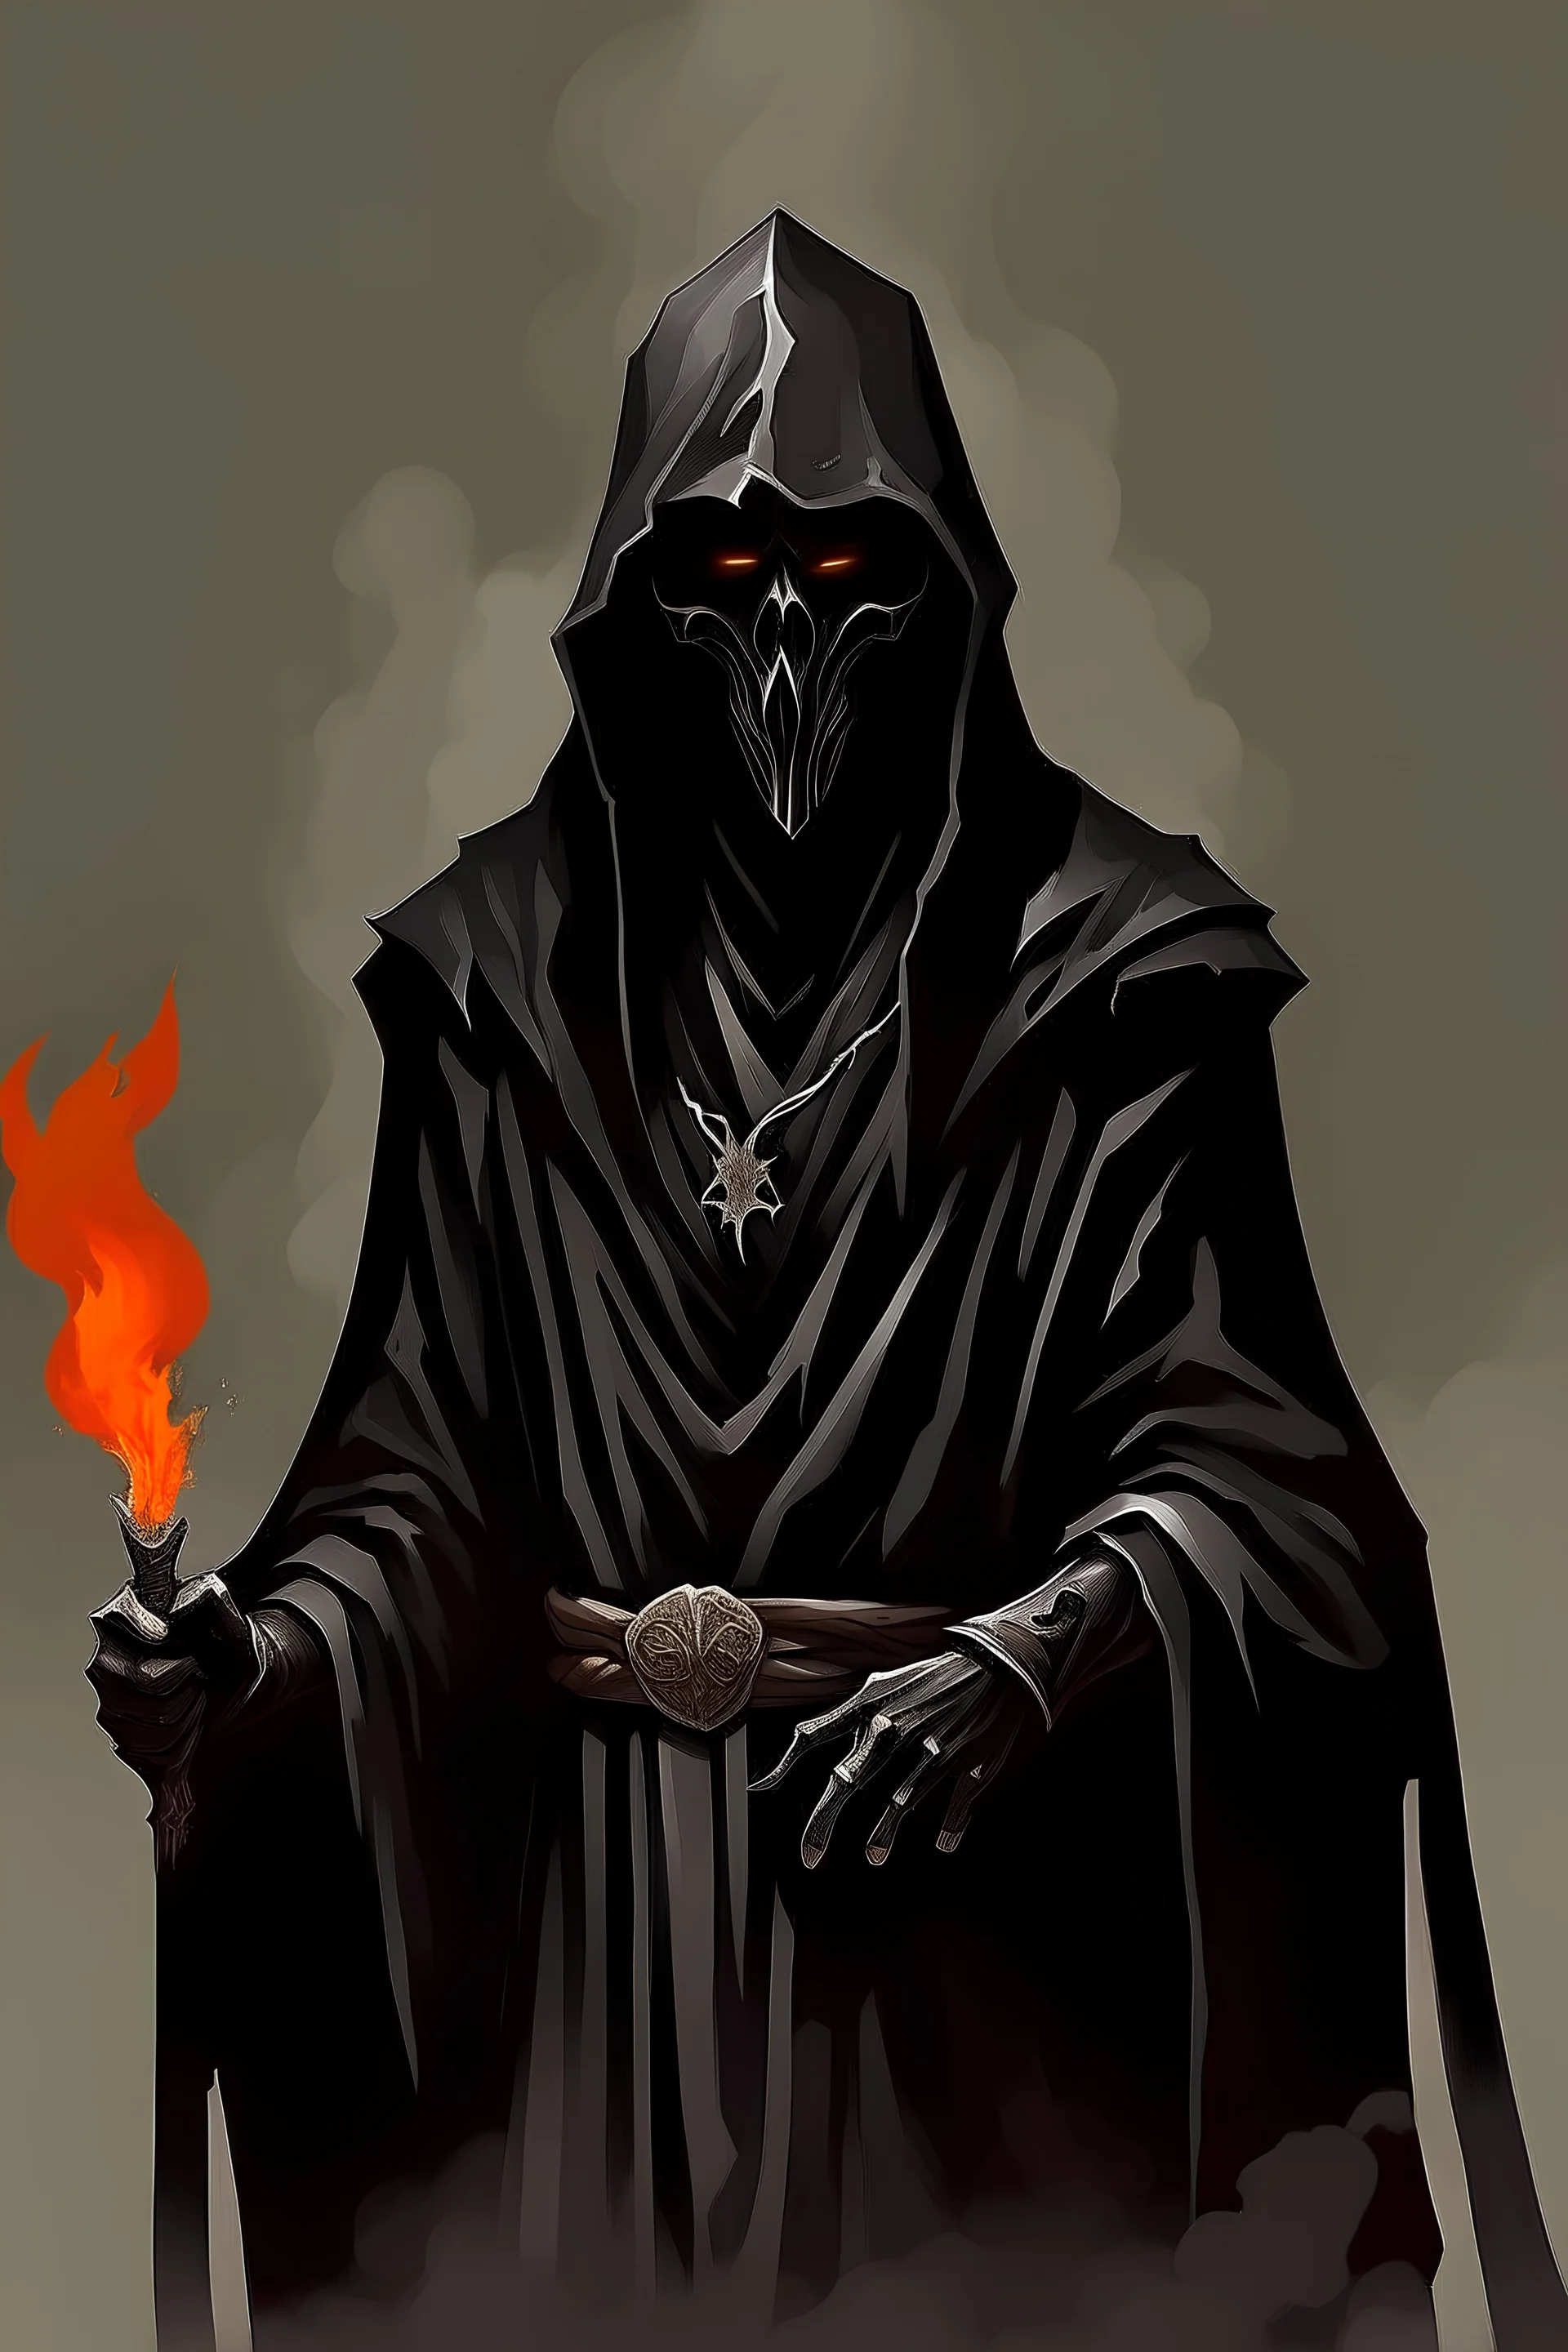 warlock, black mask, black robe, tall, black smoke